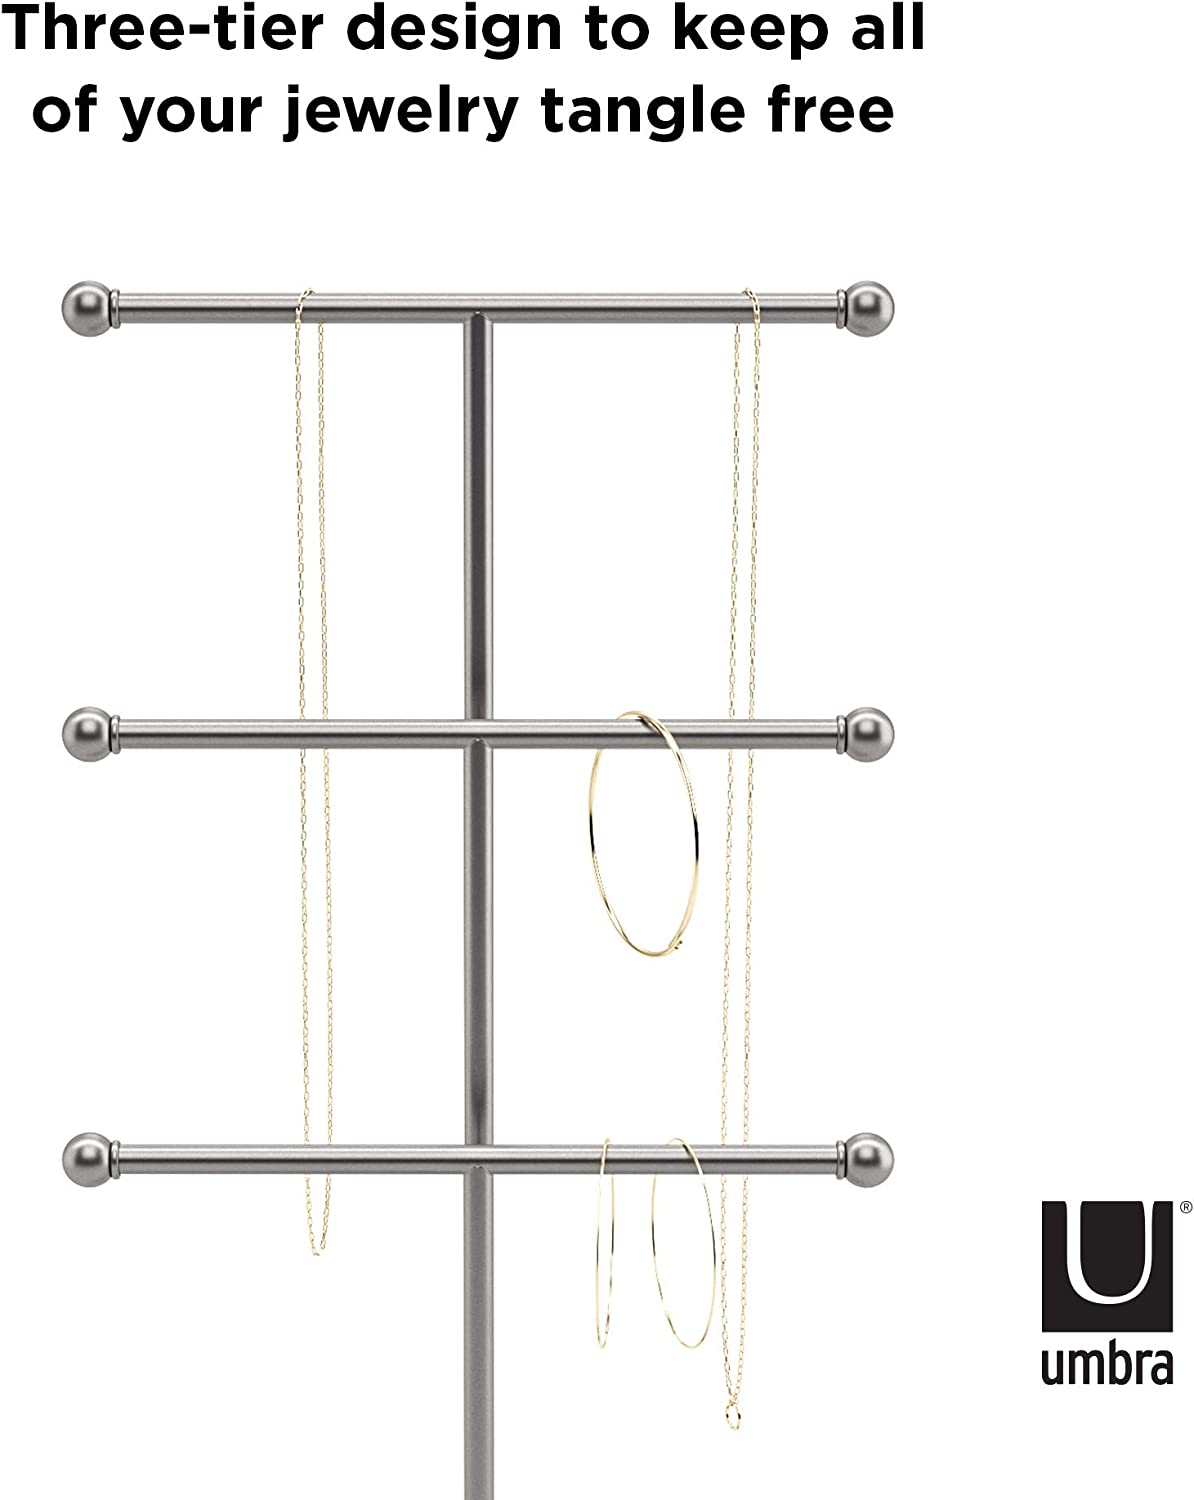 Umbra Trigem Jewelry Stand, White/Nickel - Pro-Distributing